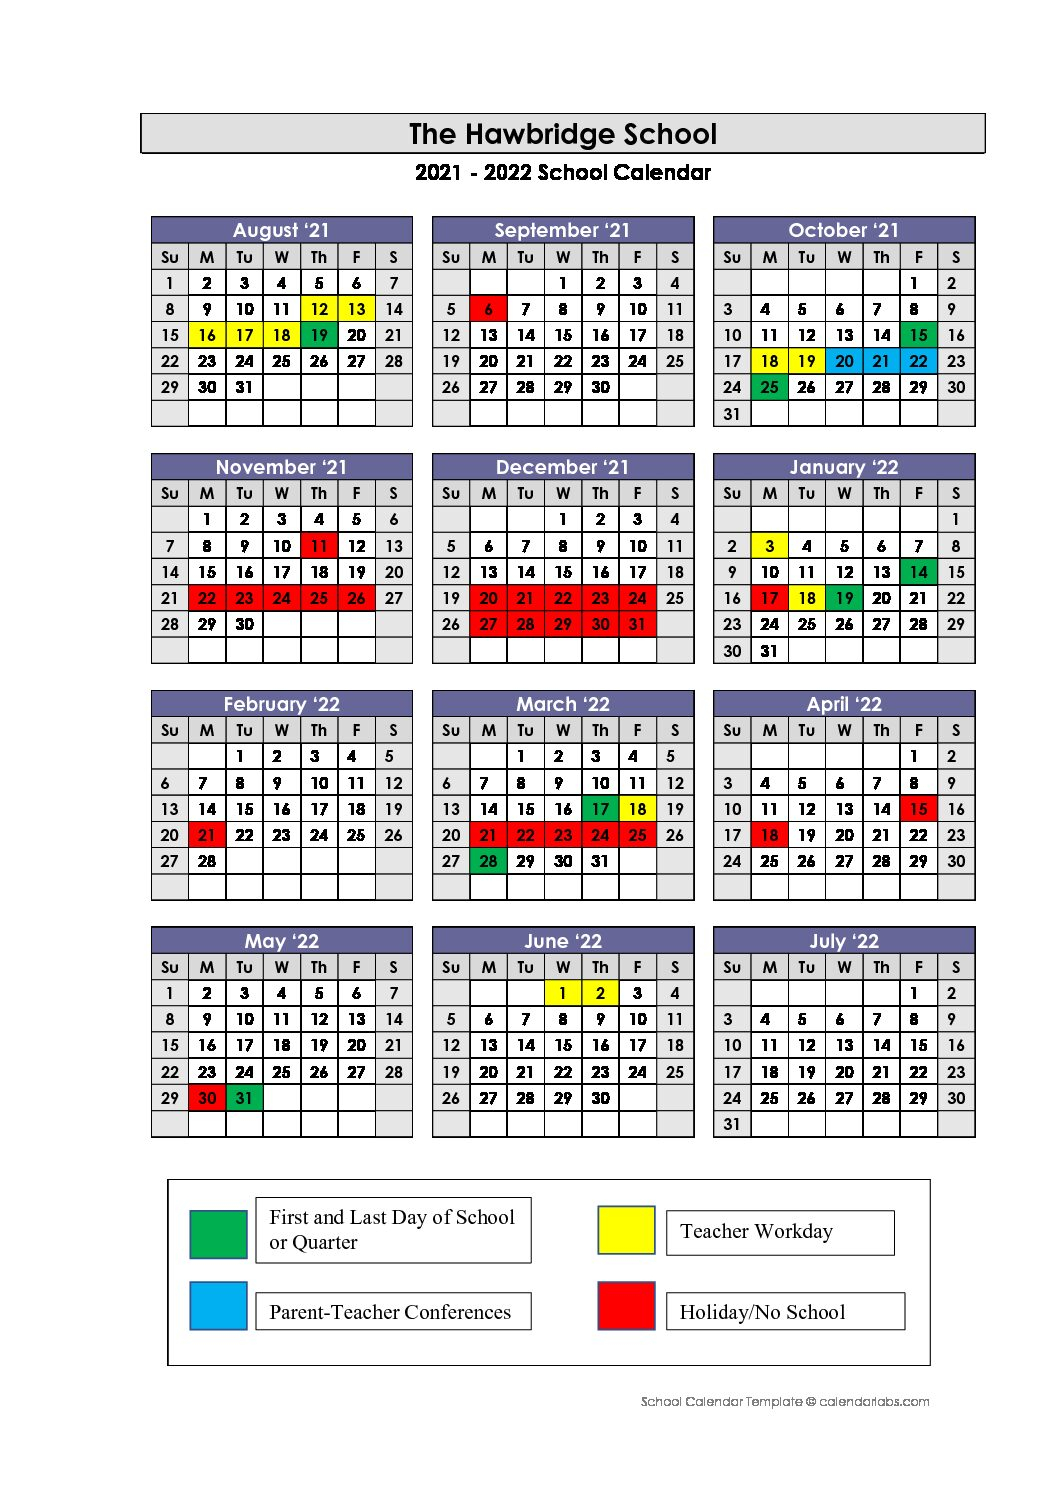 Regent University Spring 2023 Calendar Springcalendars net